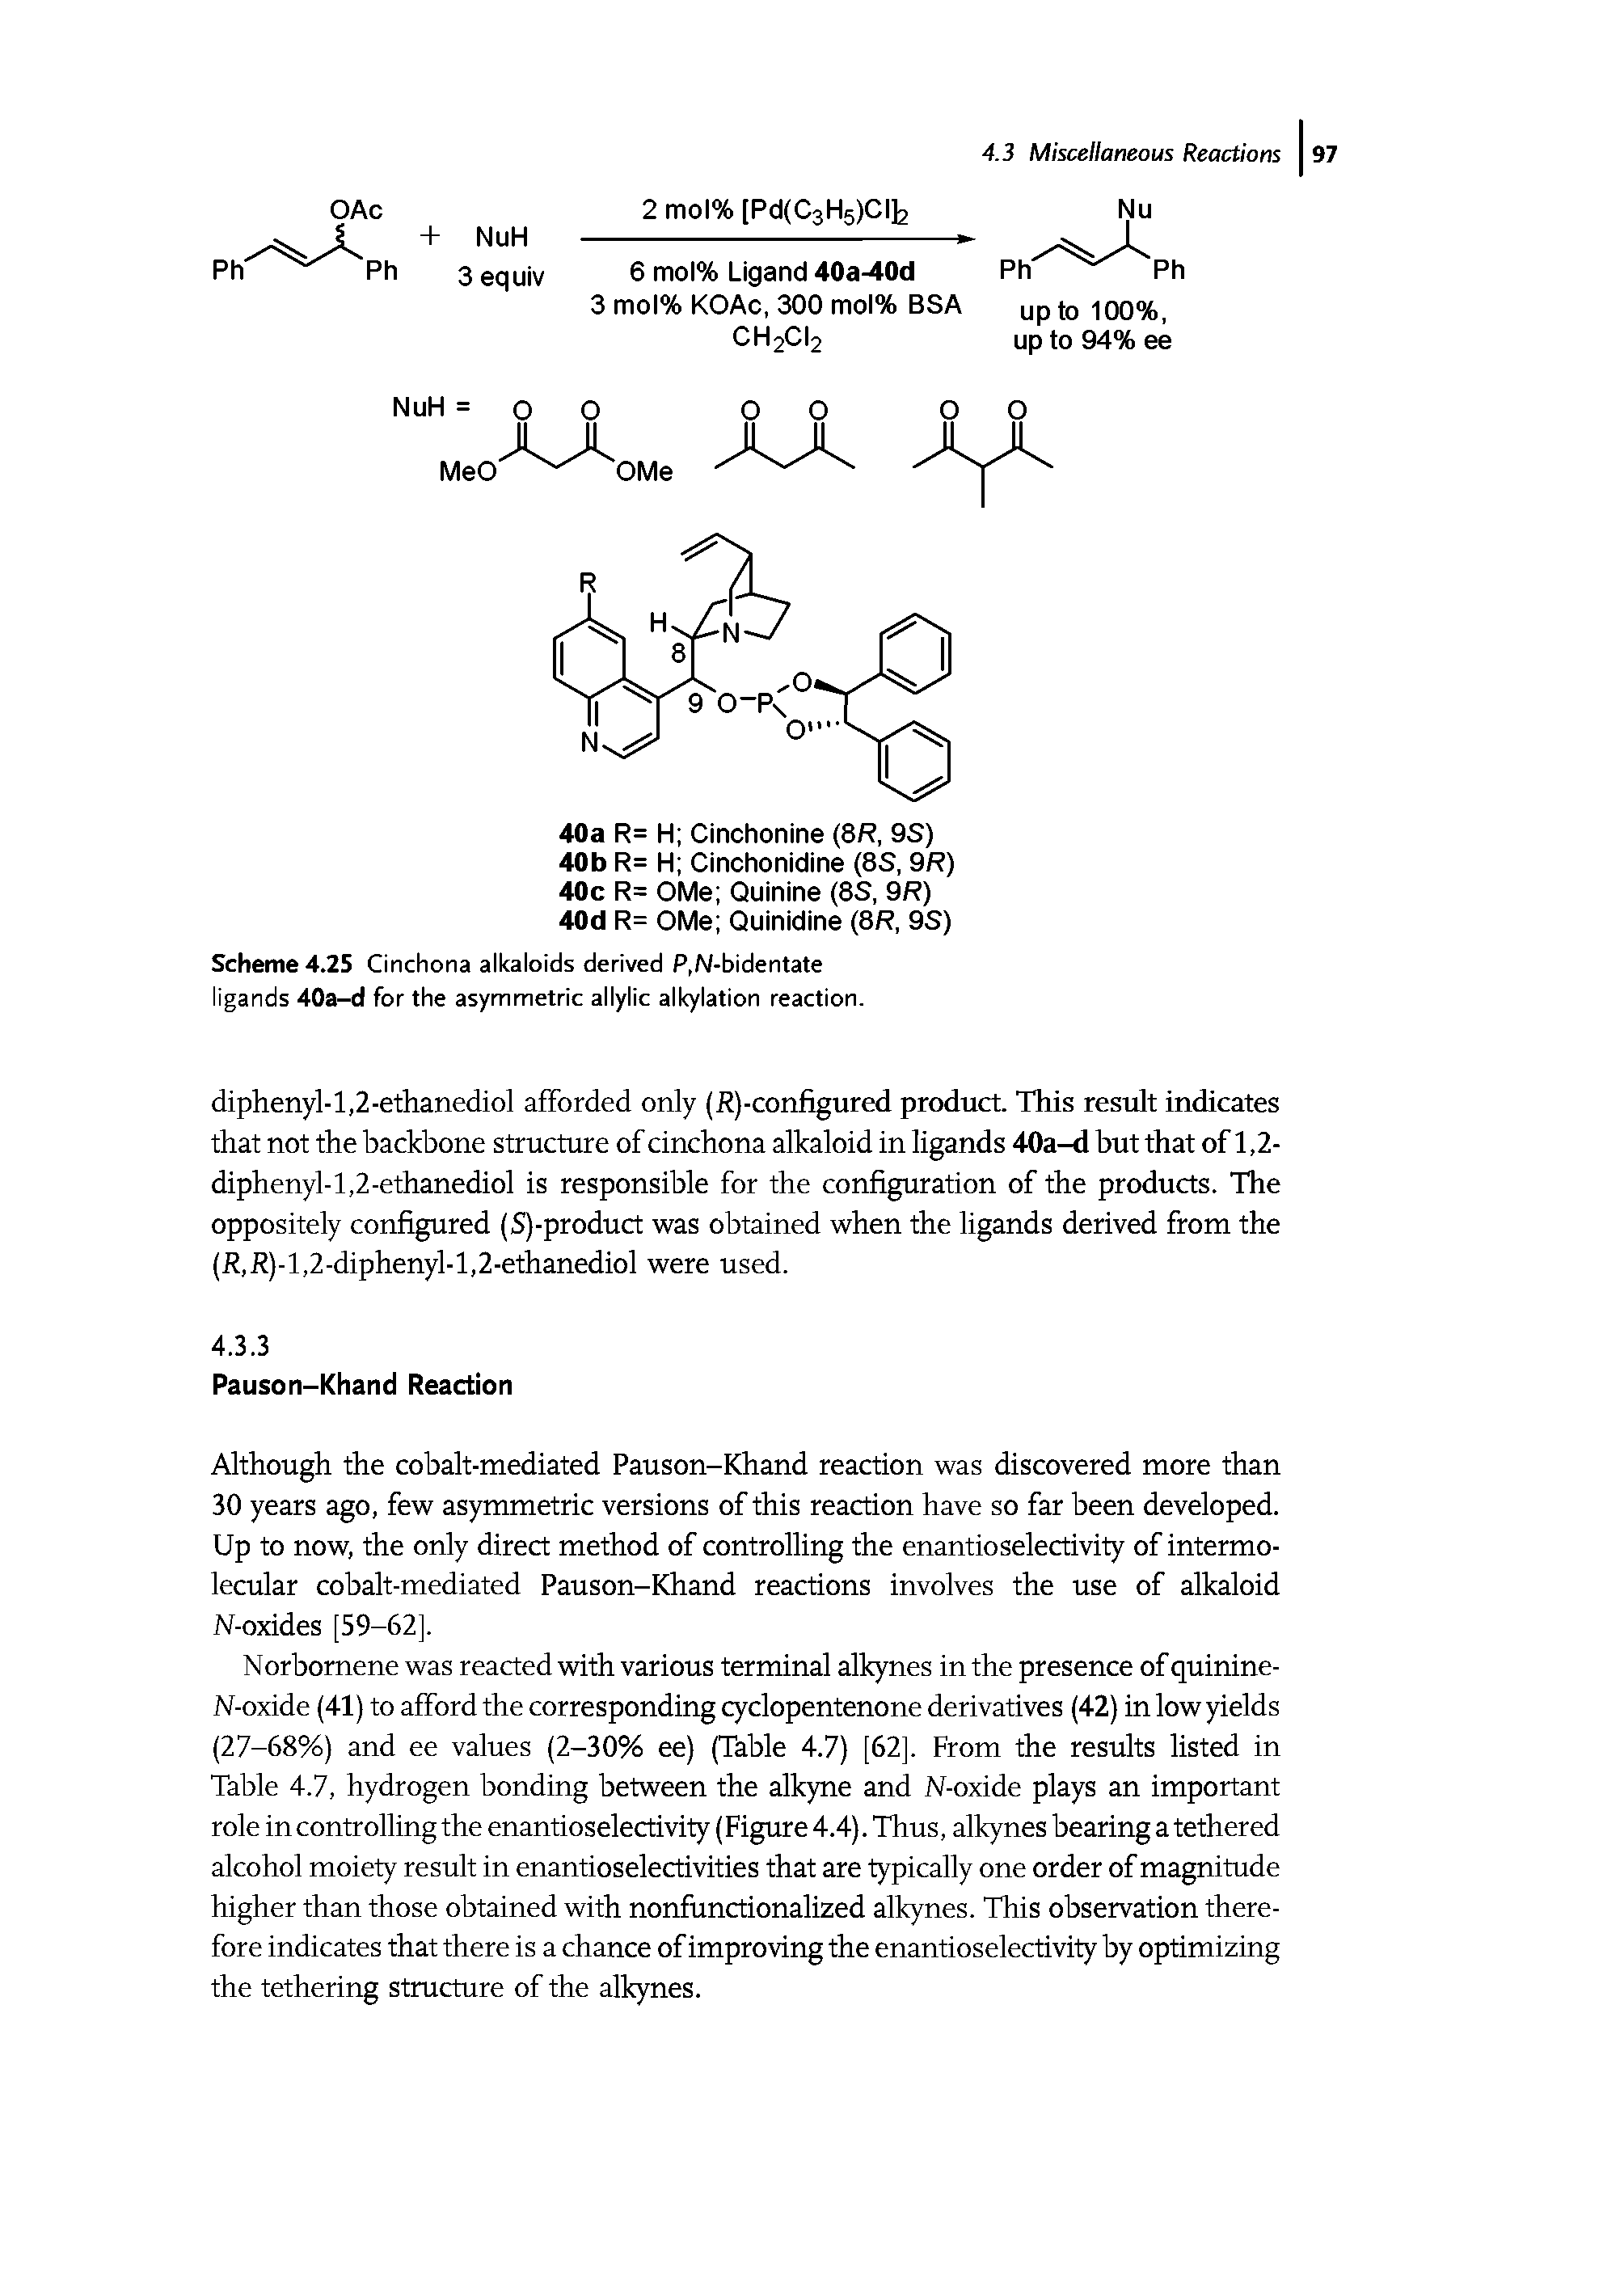 Scheme 4.25 Cinchona alkaloids derived P,N-bidentate ligands 40a-d for the asymmetric allylic alkylation reaction.